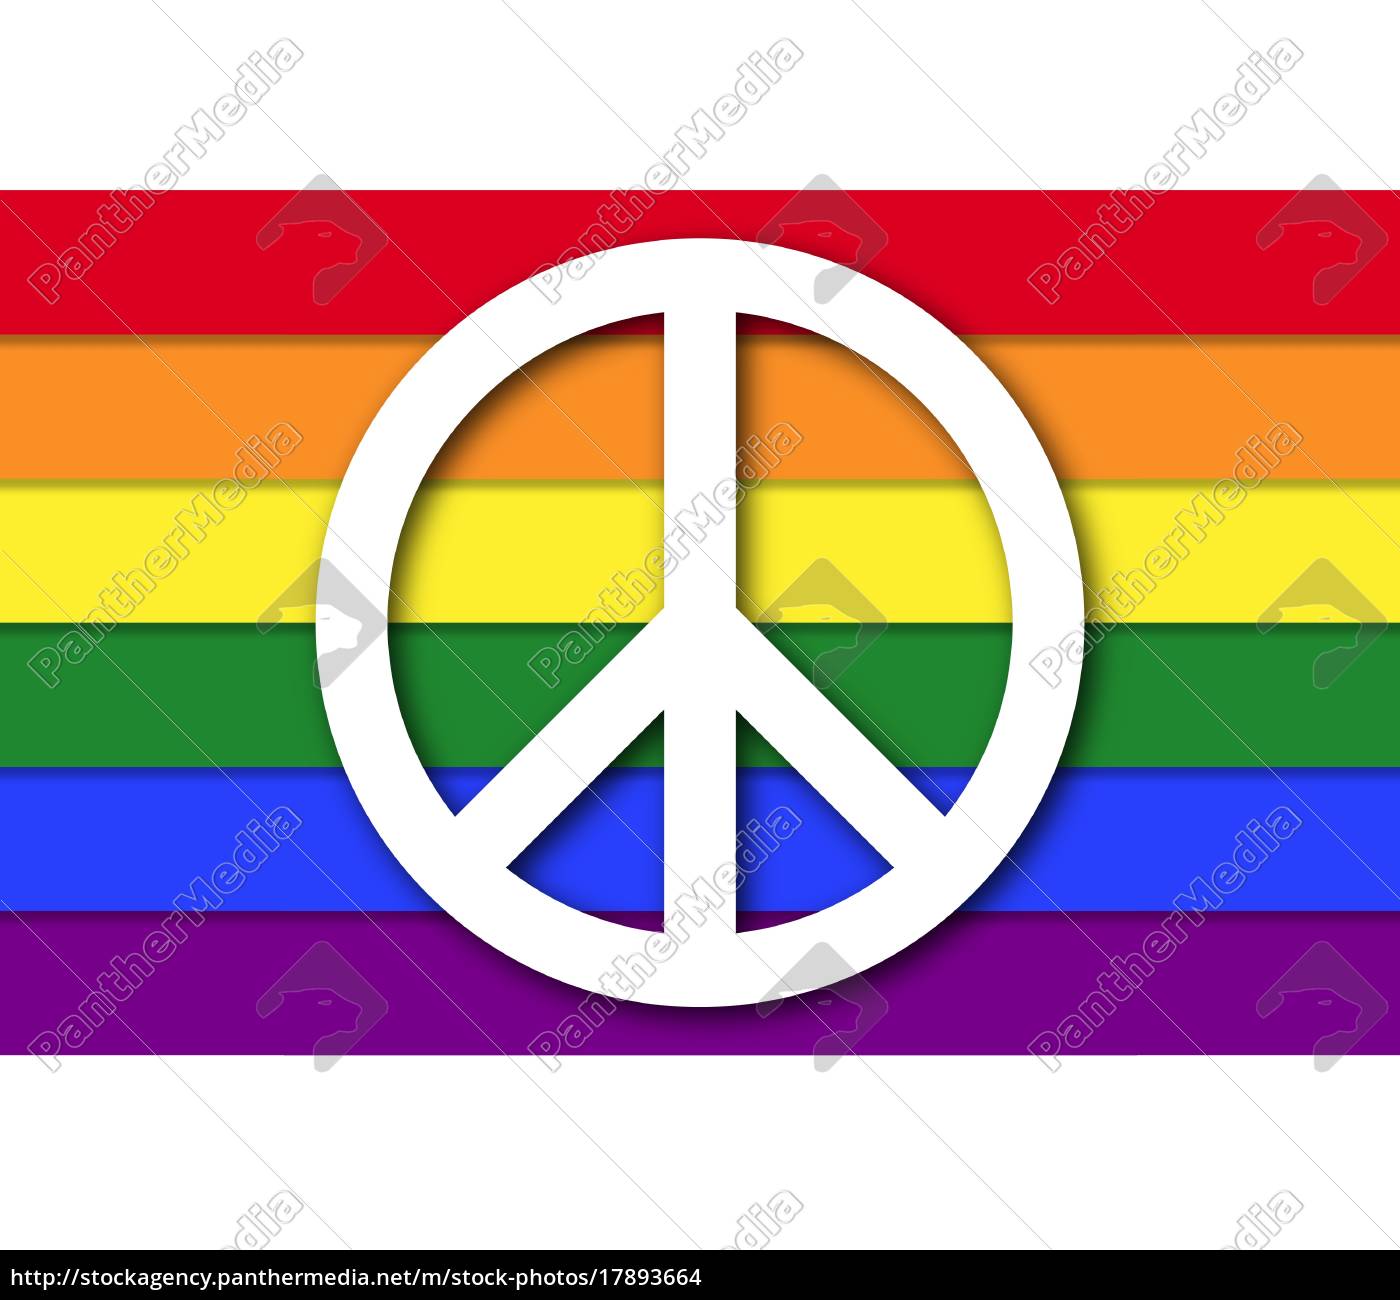 gay pride colors and symbols